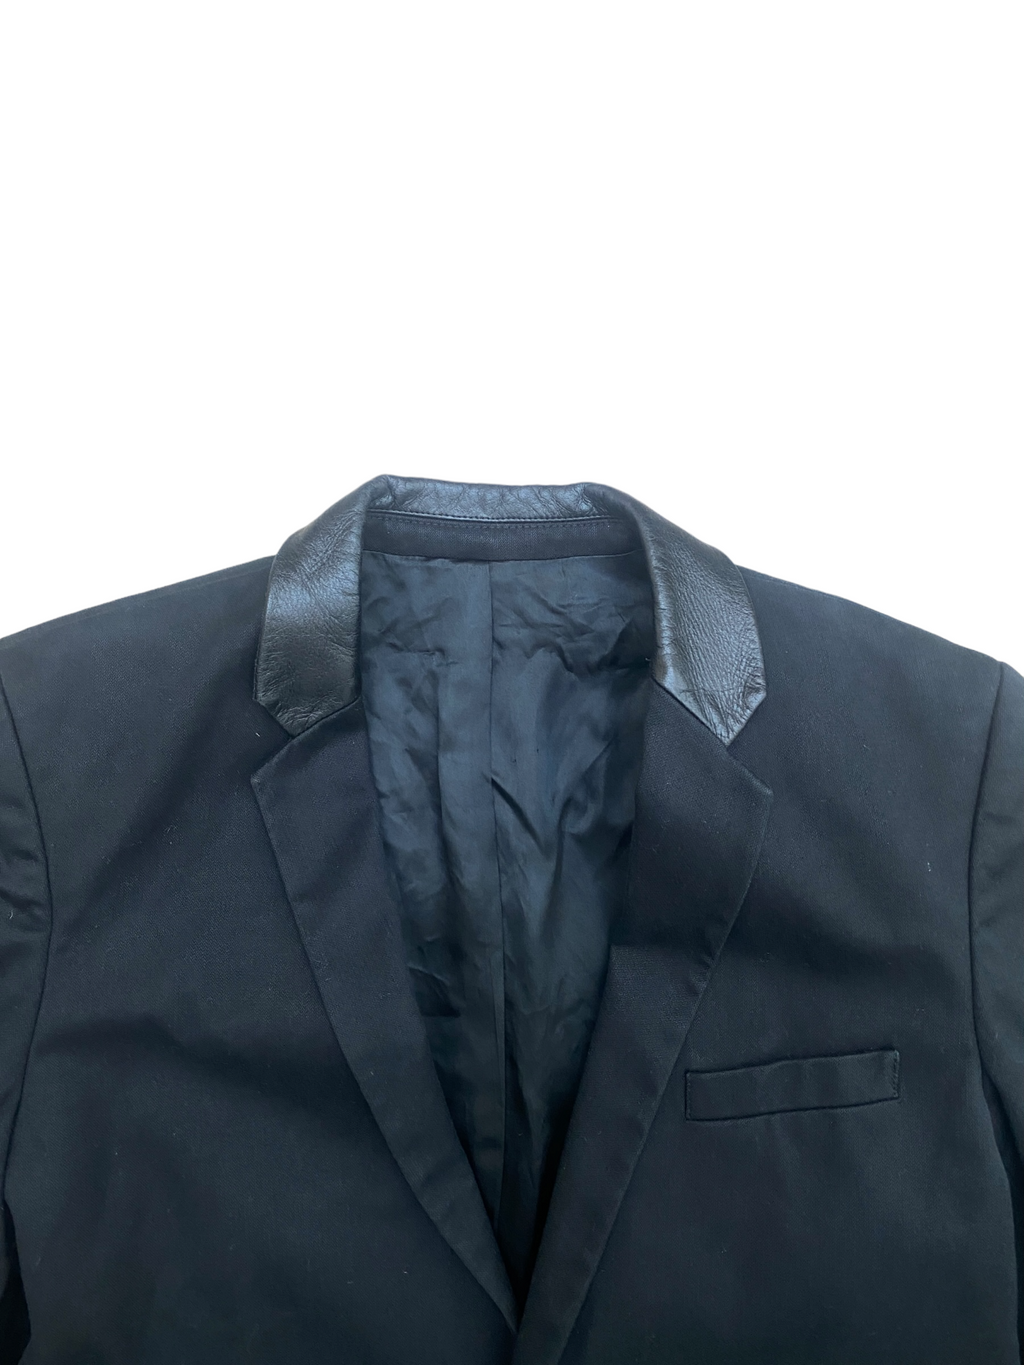 Black Blazer Jacket